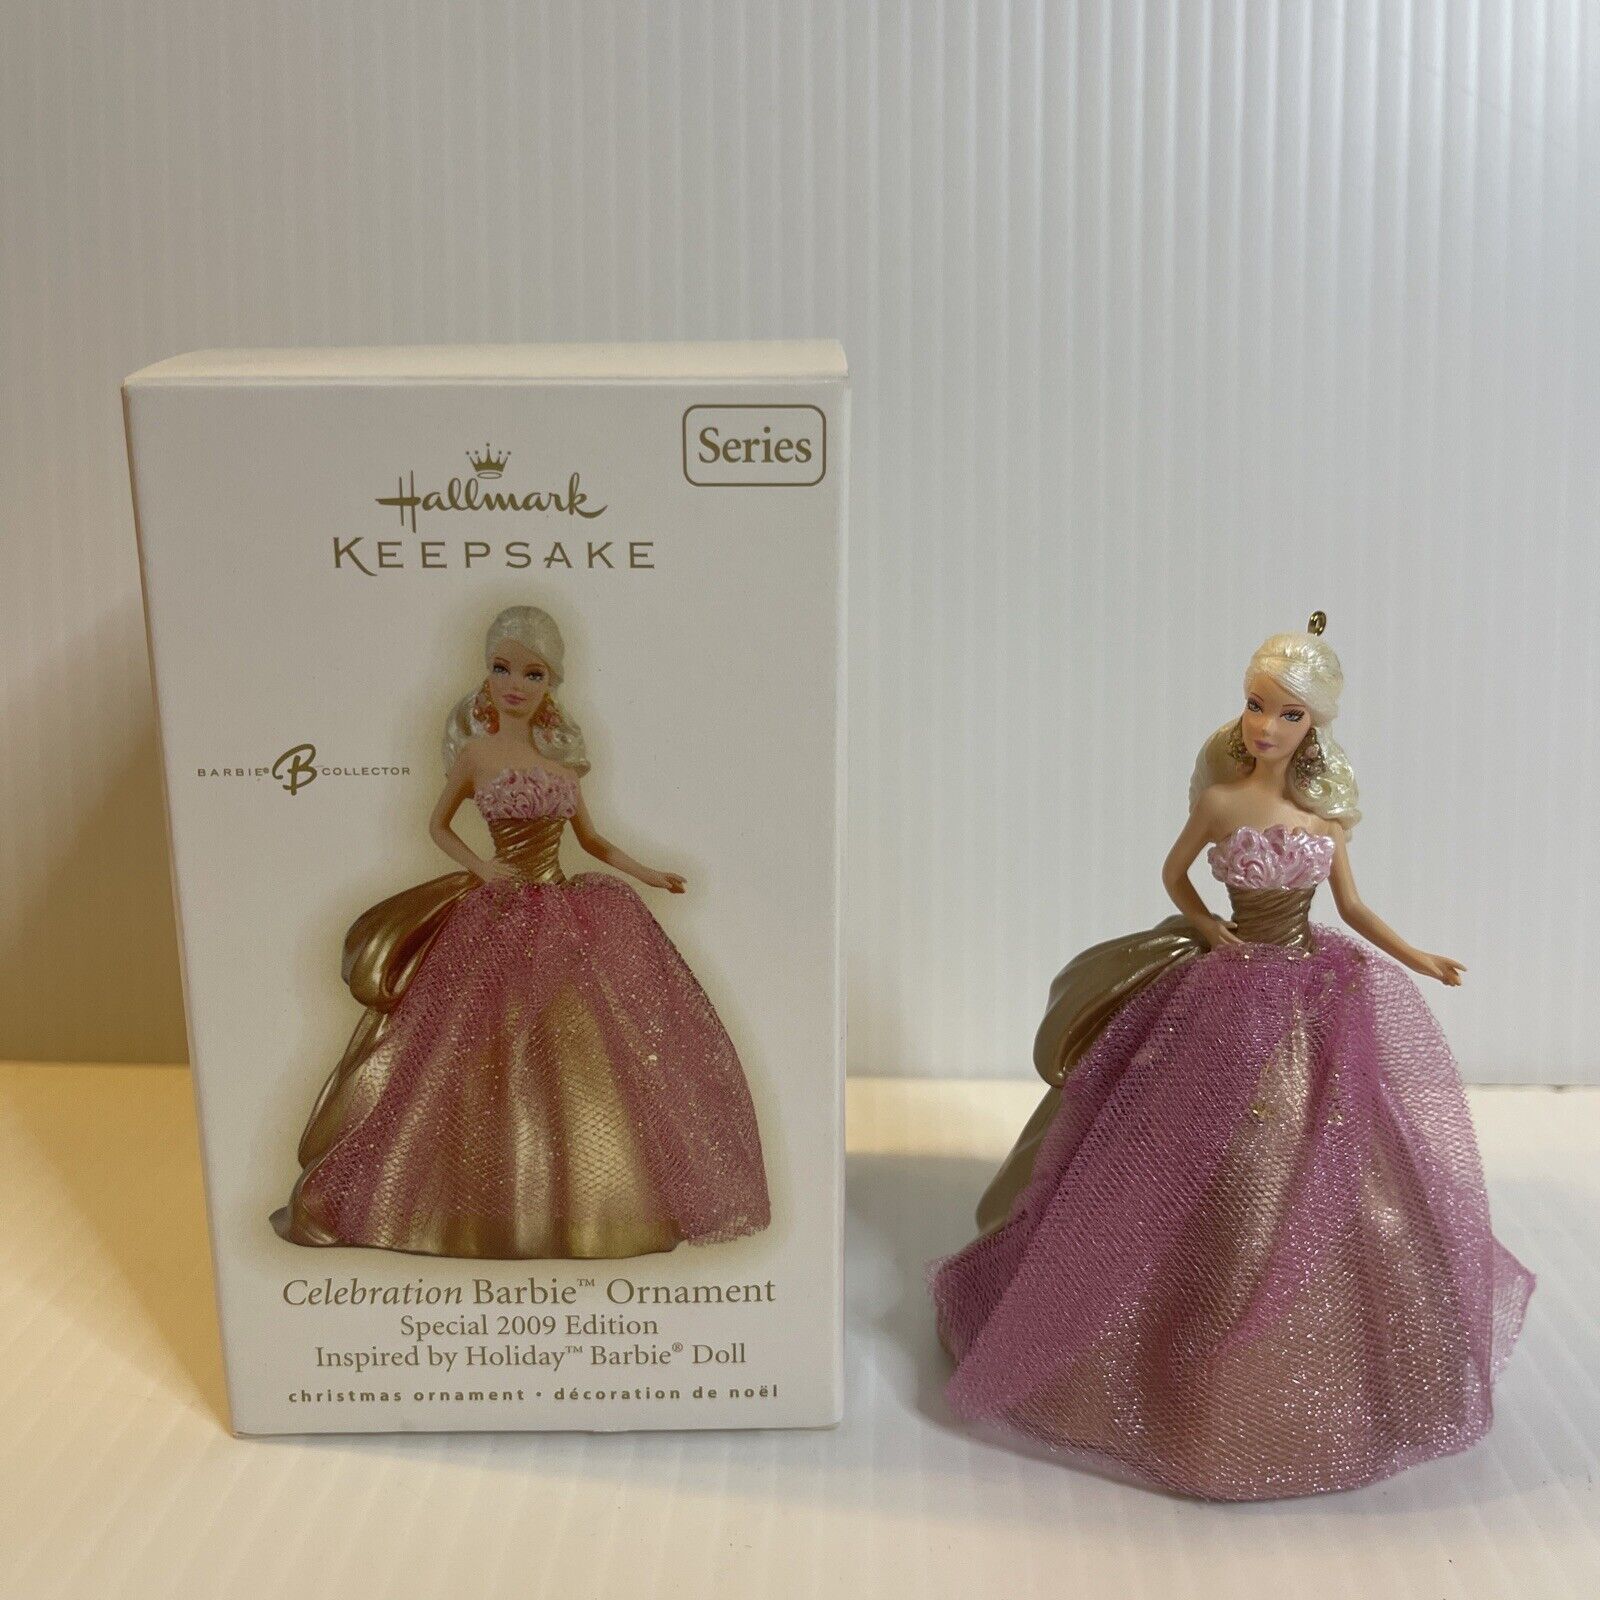 Hallmark Keepsake - Celebration Barbie Ornament - Special 2009 Edition